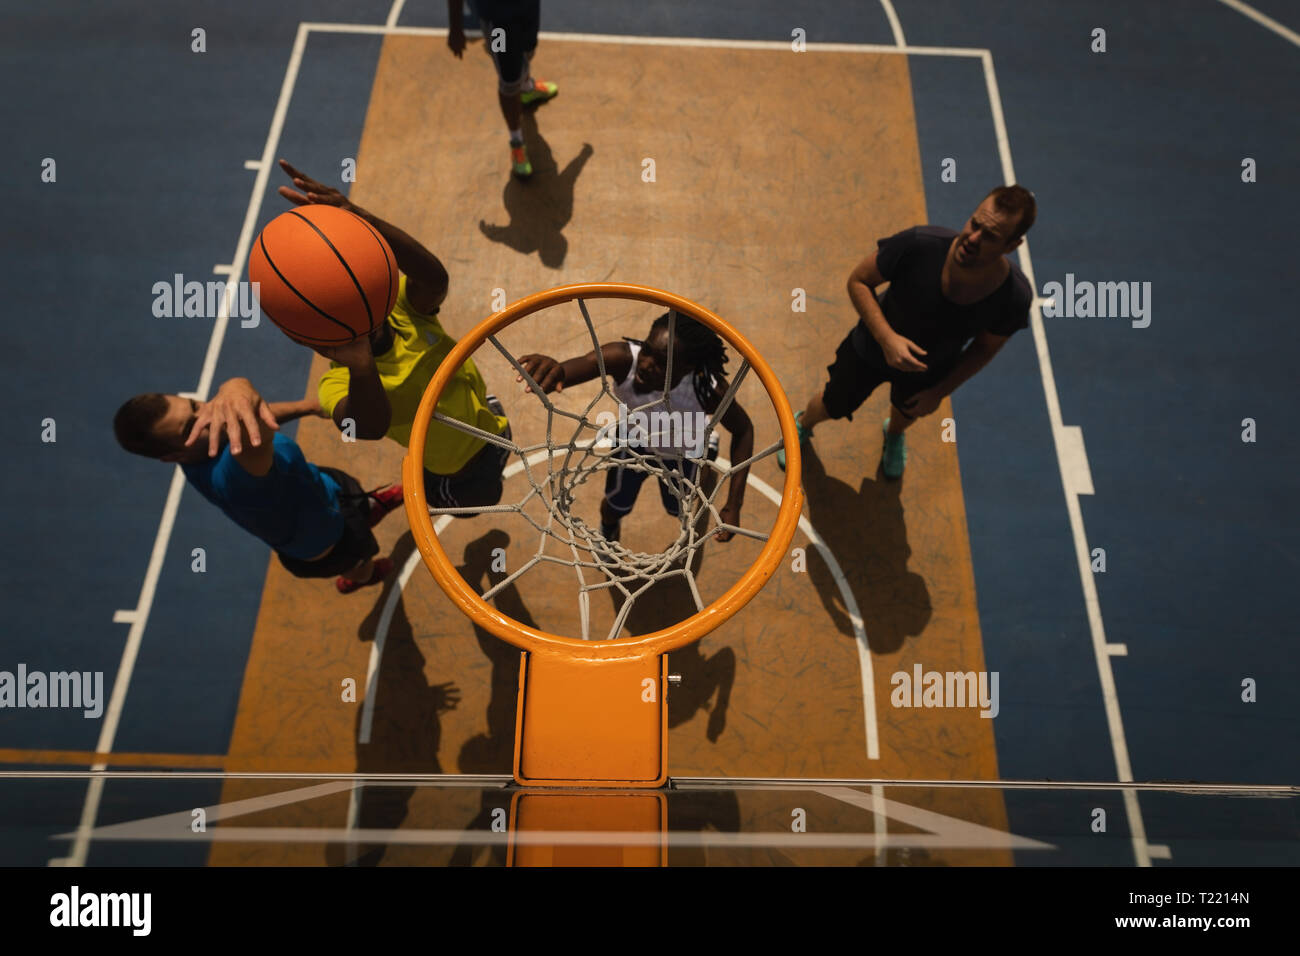 Basketballspieler Basketball spielen auf Basketball Stockfoto